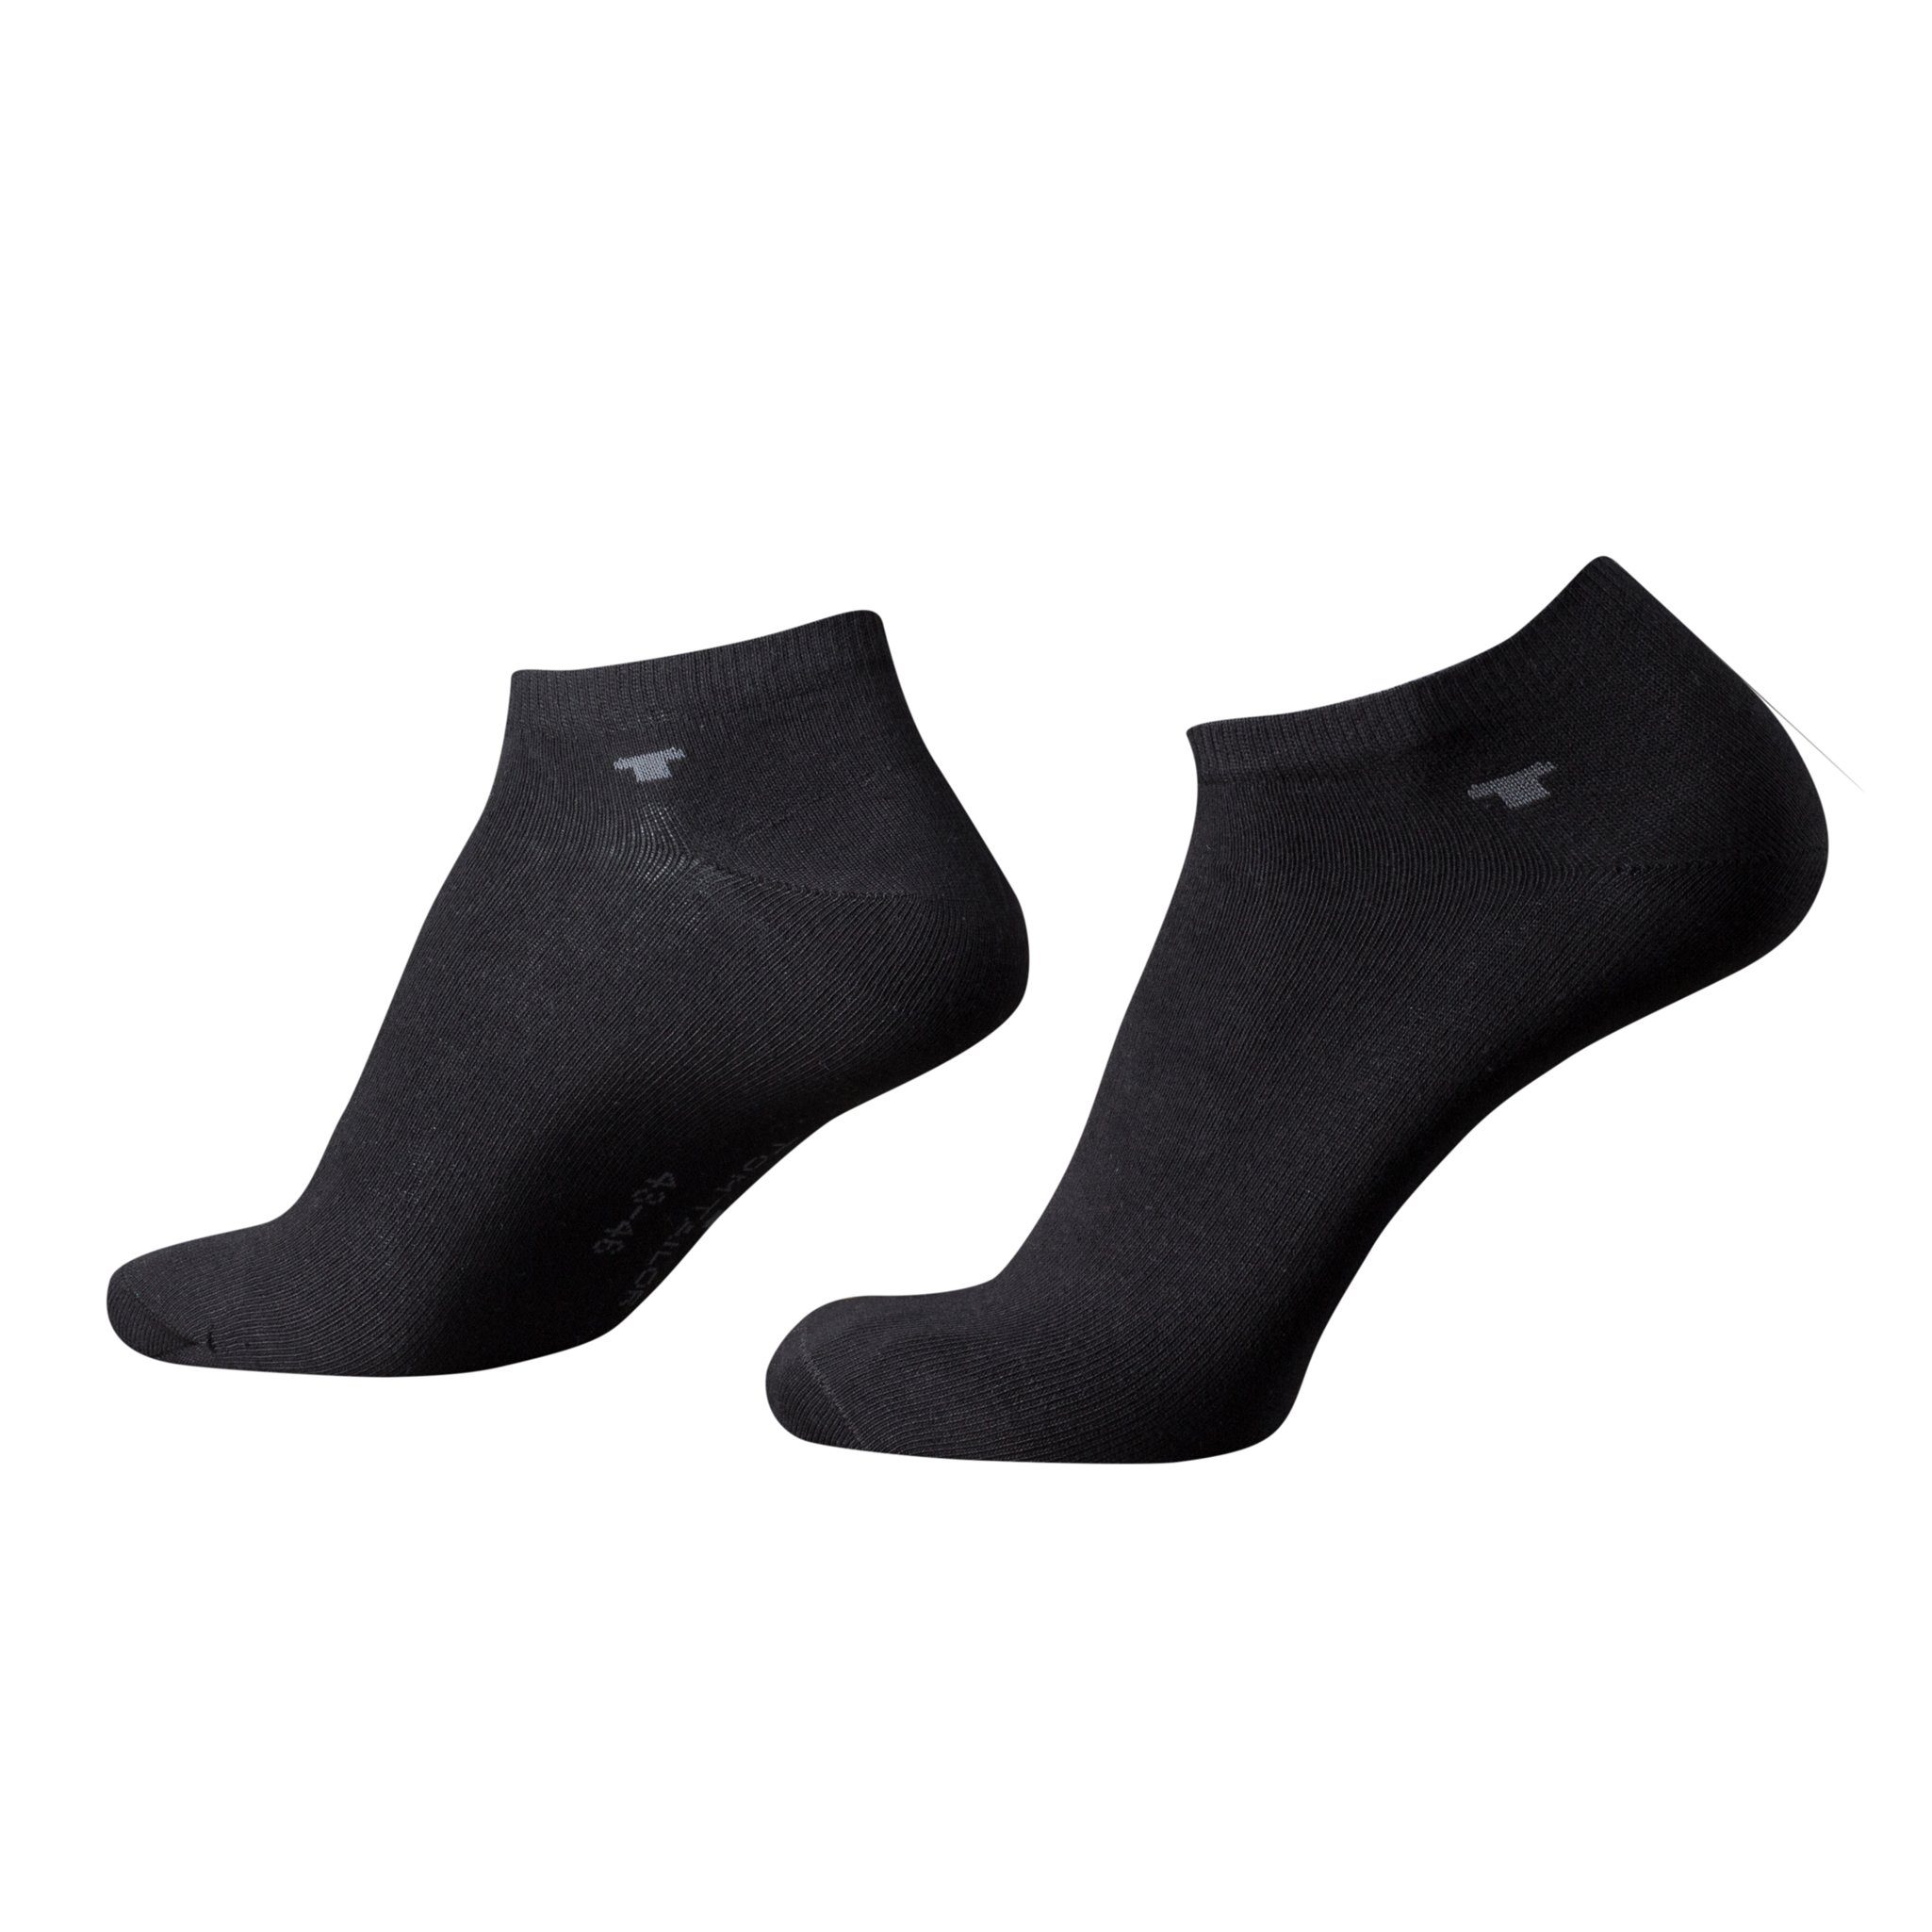 TOM TAILOR Socken 9415861046 Tom Tailor 8 Paar Sneaker Socks schwarz Mehrpack invisible Strümpfe Socken Füsslinge black